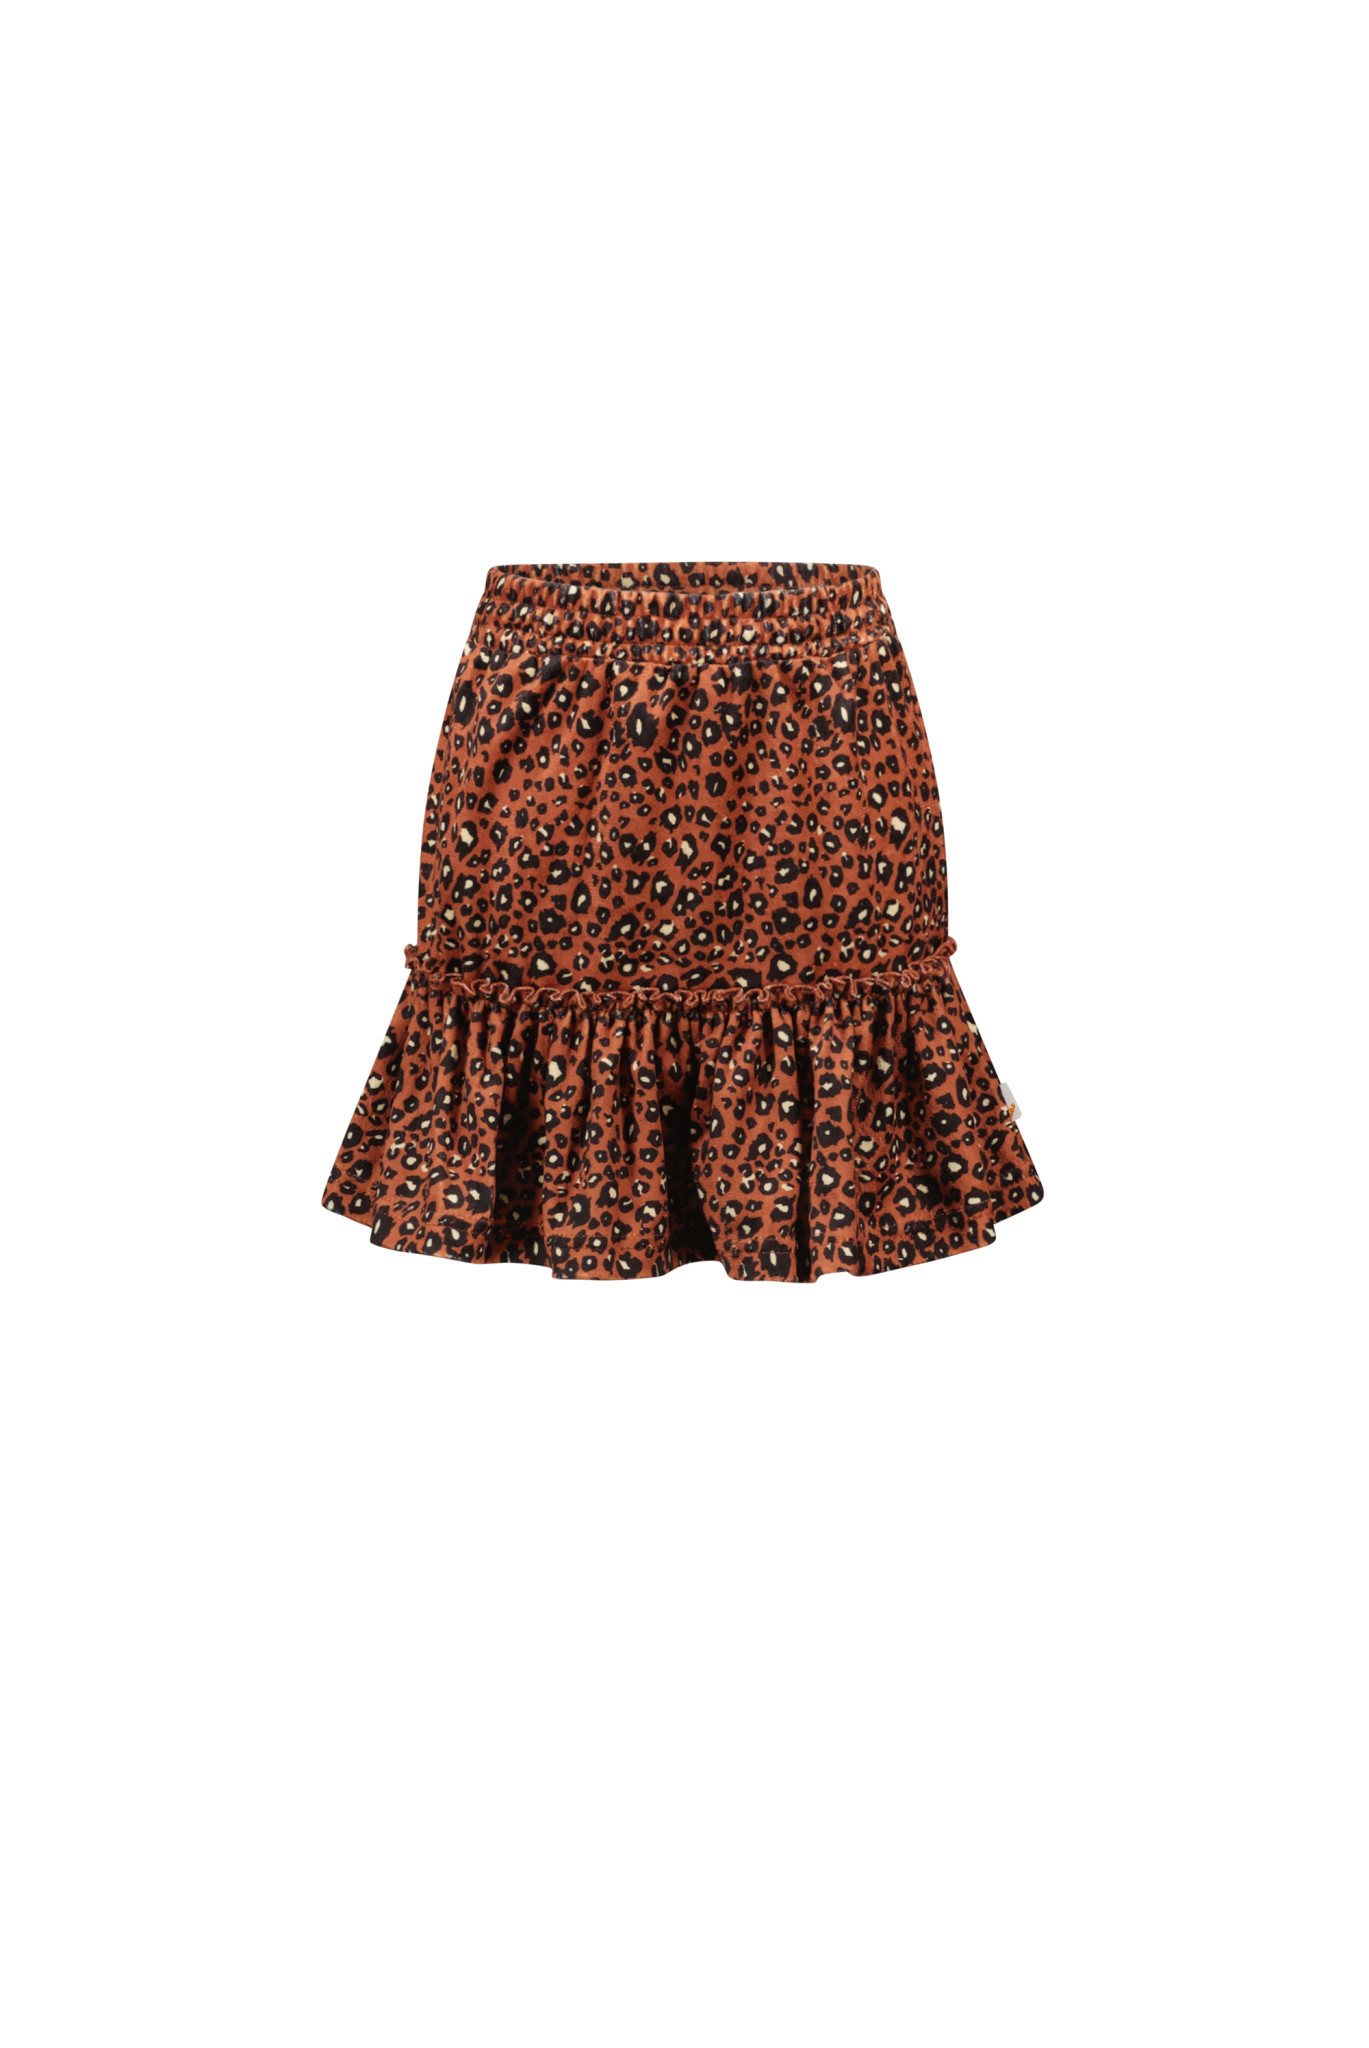 Leopard Print Skirt - Warm Orange